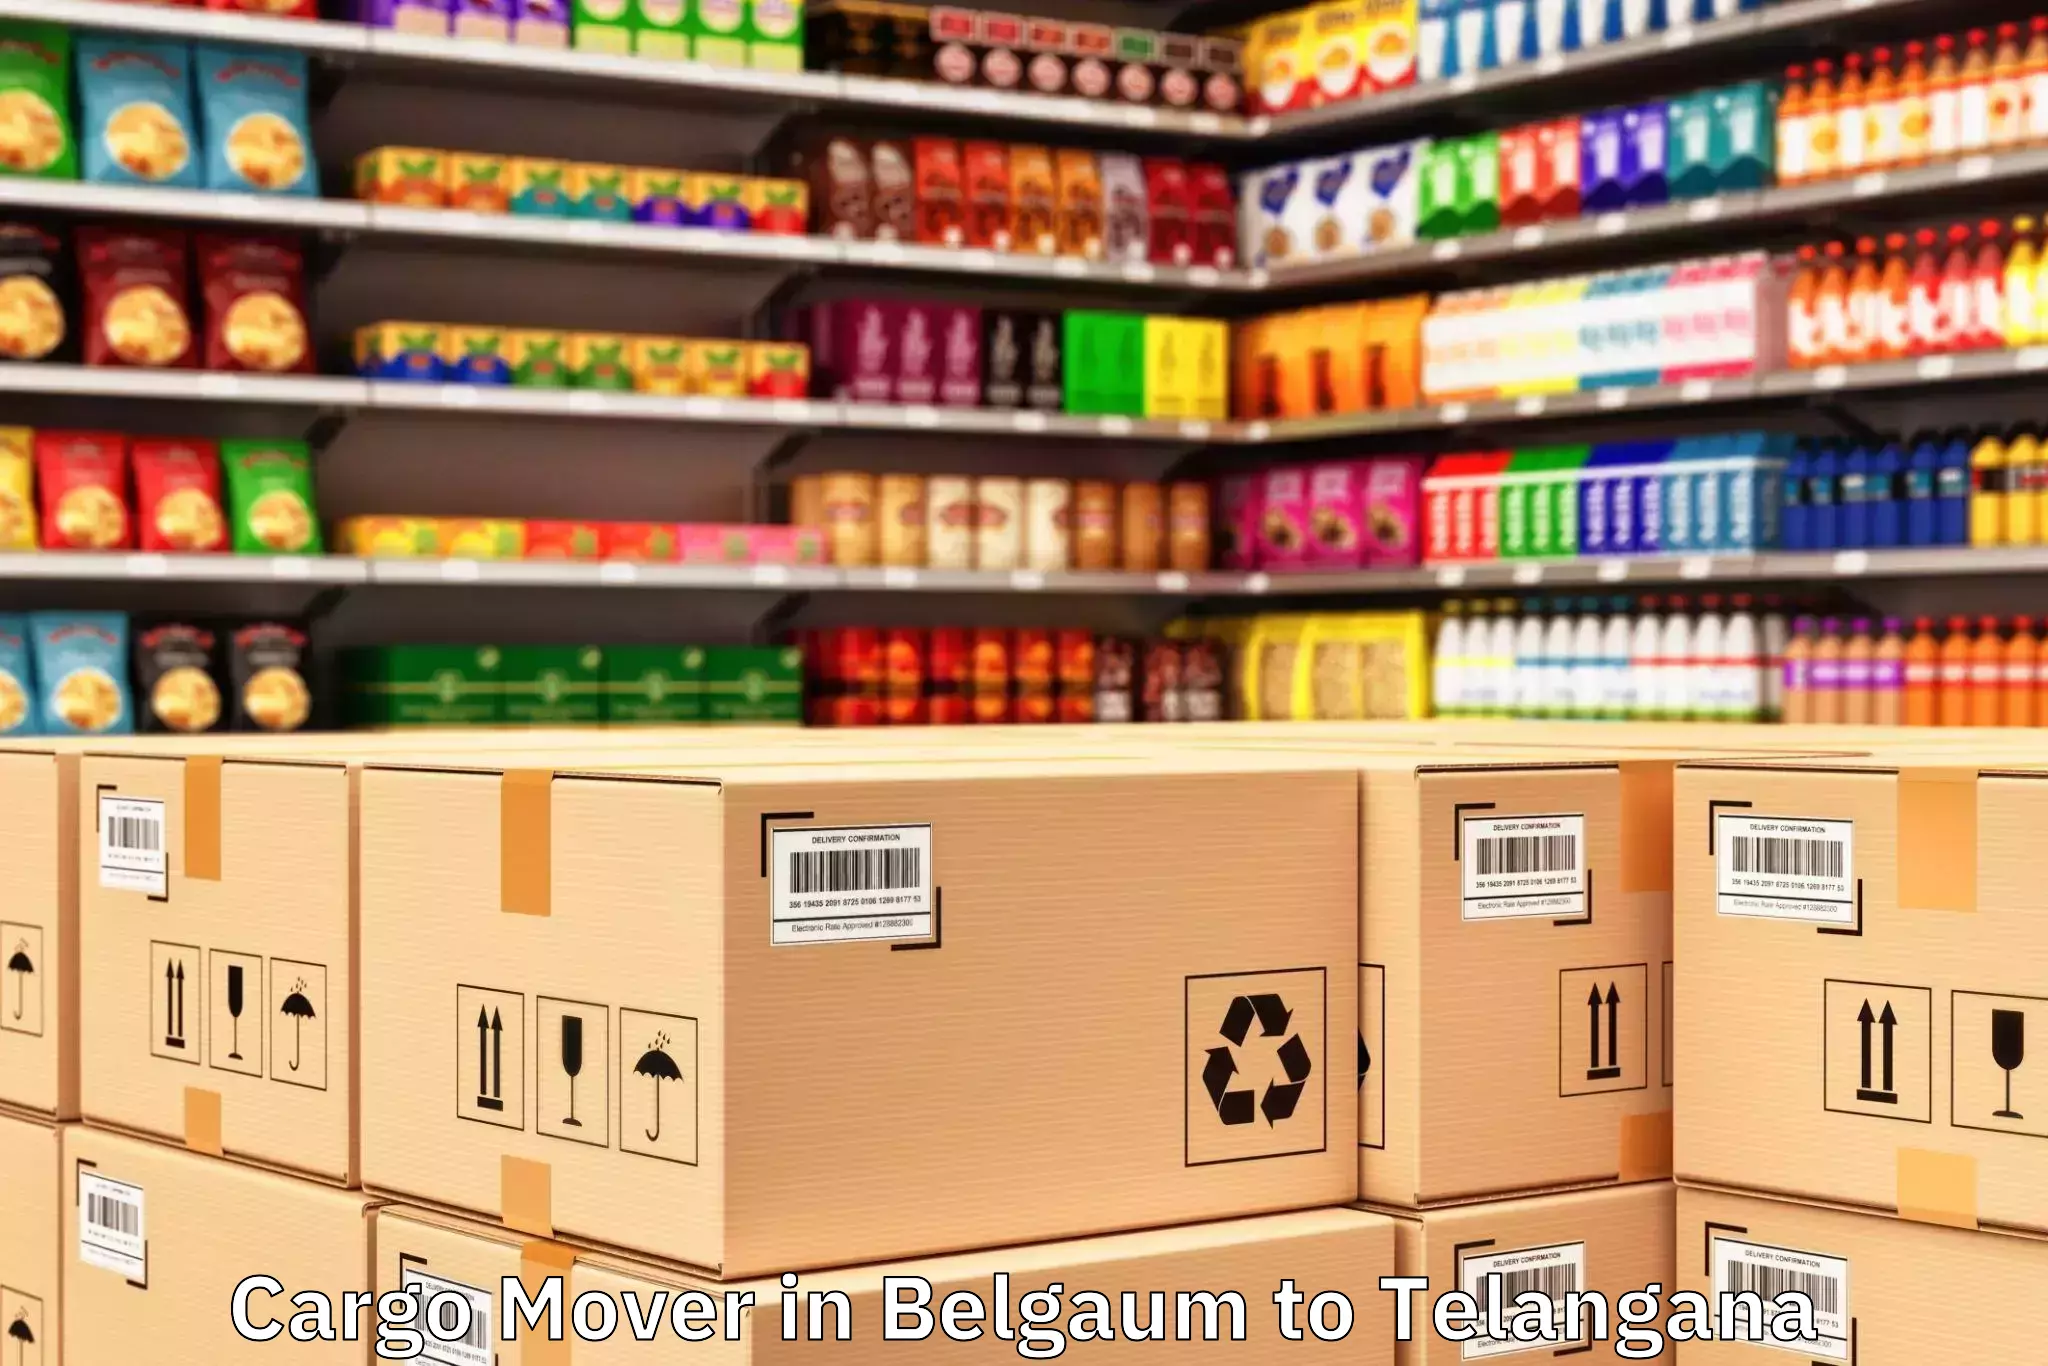 Professional Belgaum to Telangana Cargo Mover